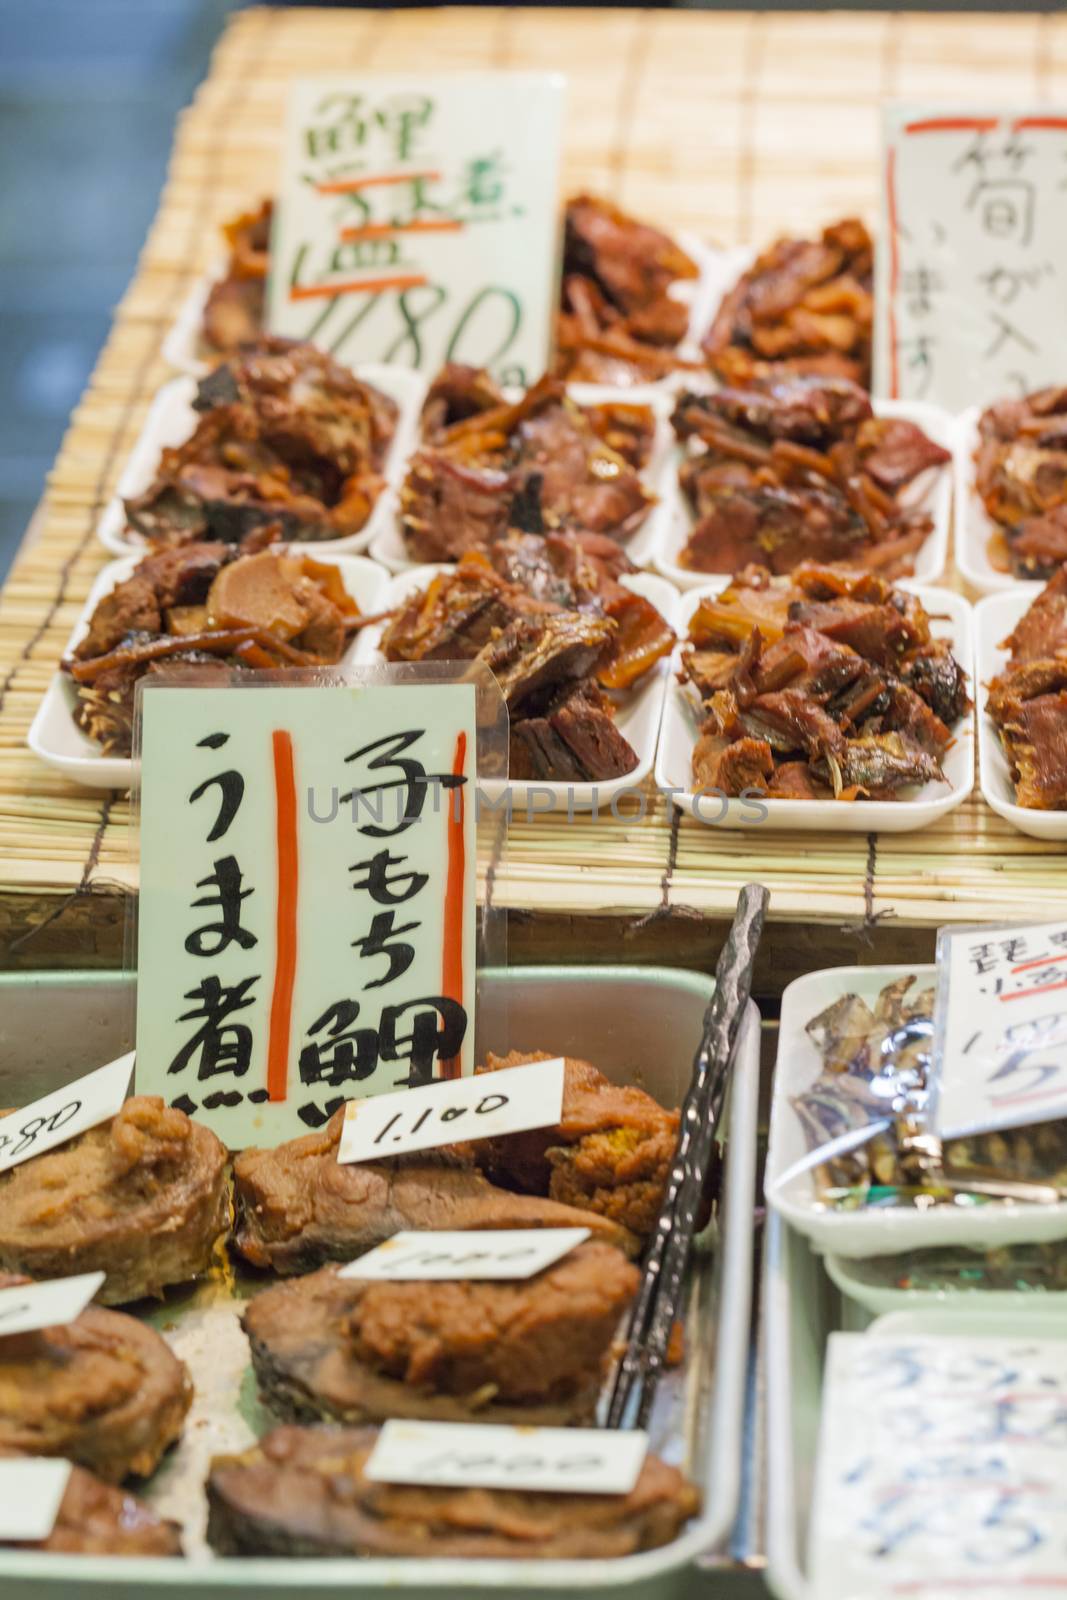 Tsukiji Fish Market, Japan.

